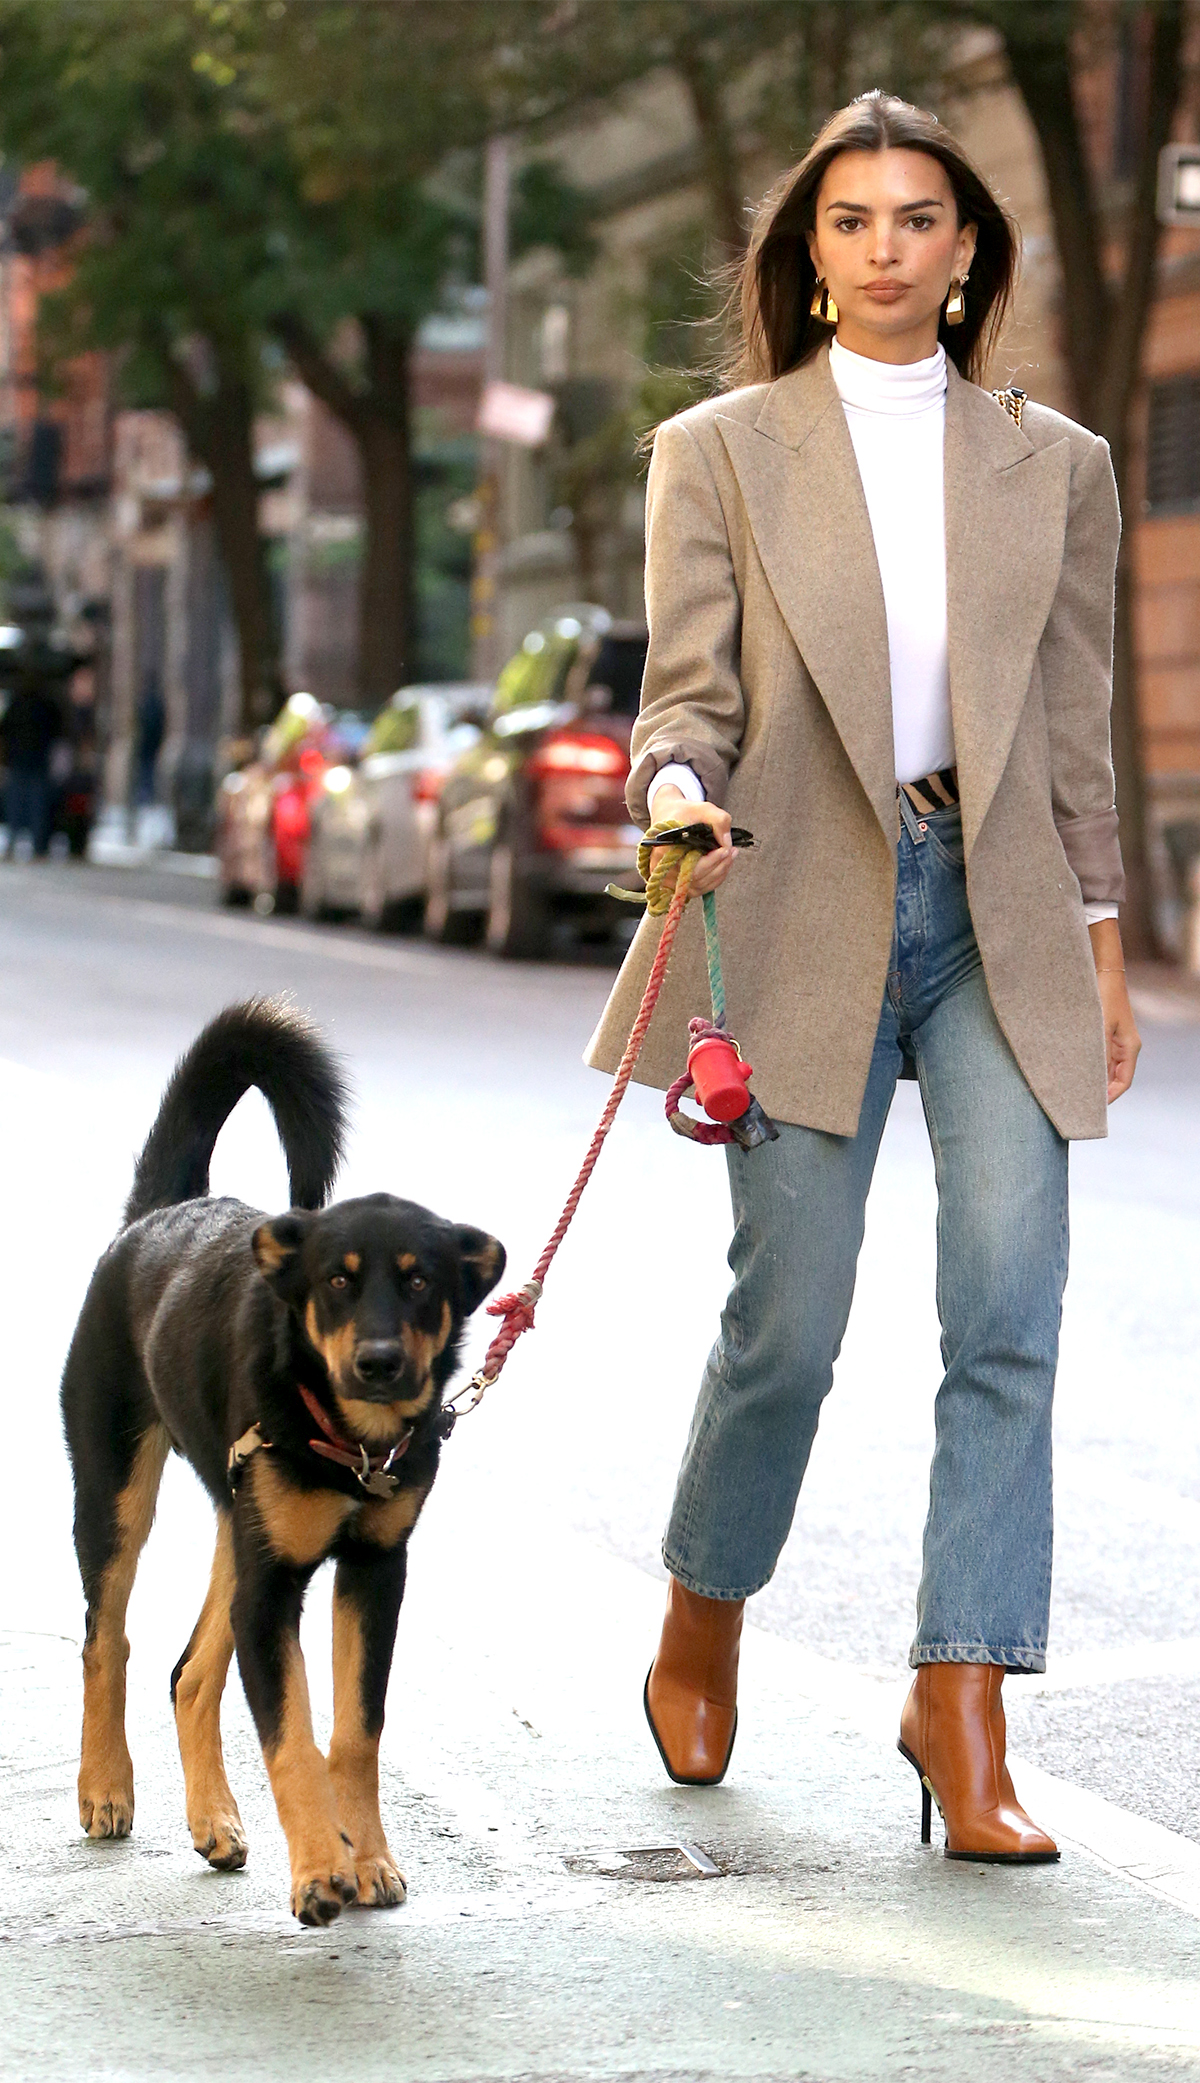 Emily Ratajkowski walking dog in jeans and blazer outfit